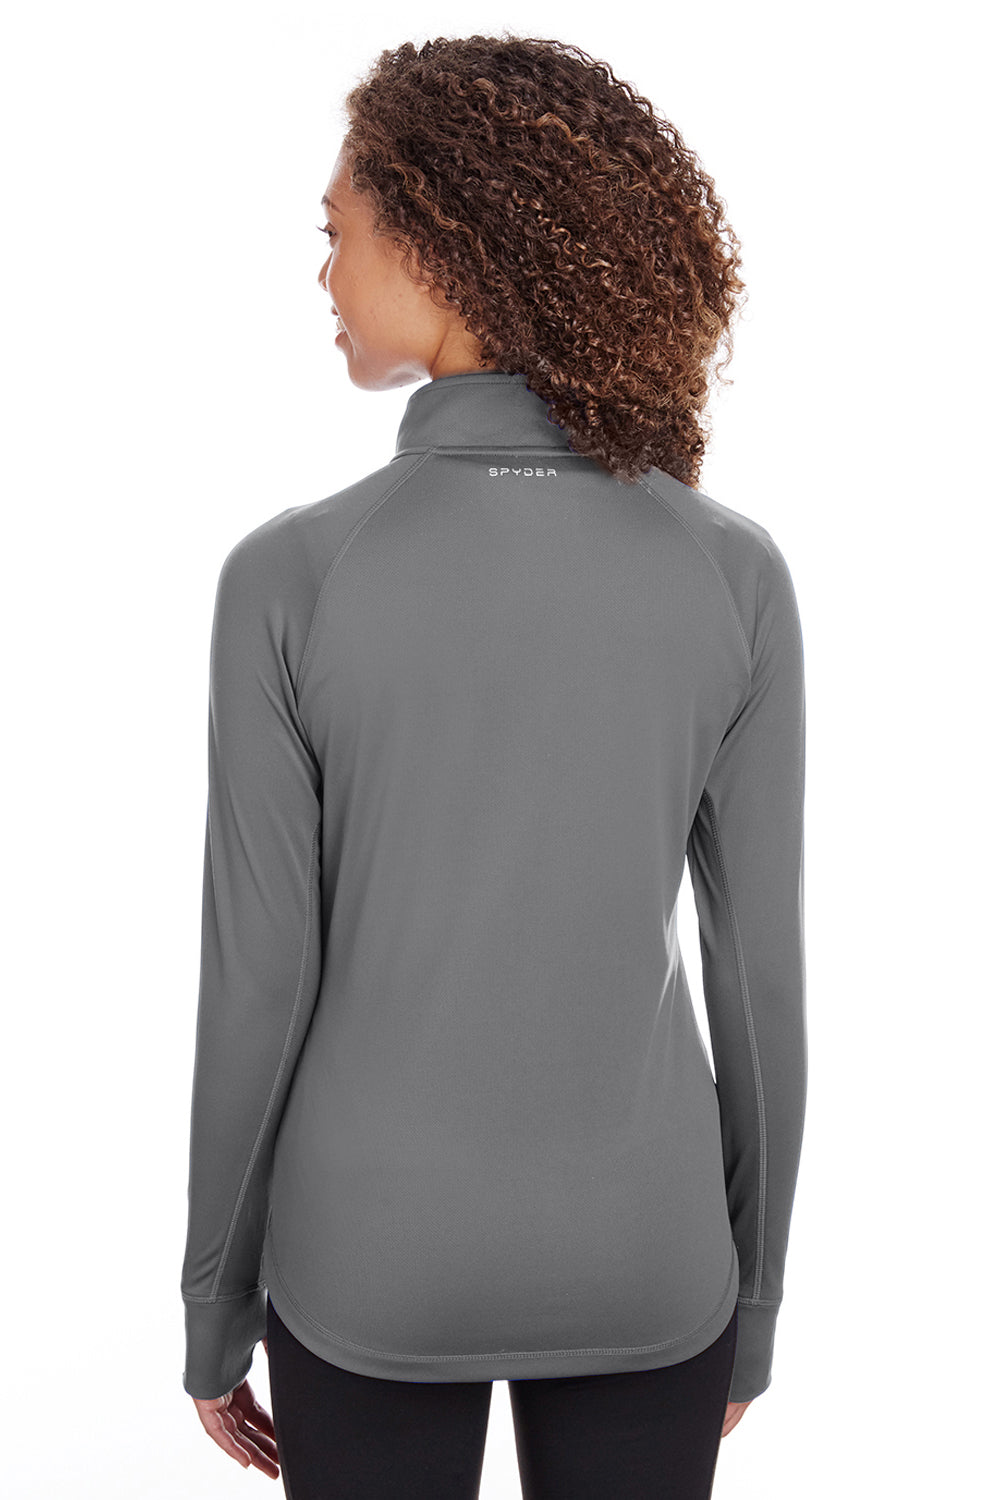 Spyder S16798 Womens Freestyle 1/4 Zip Sweatshirt Grey Back